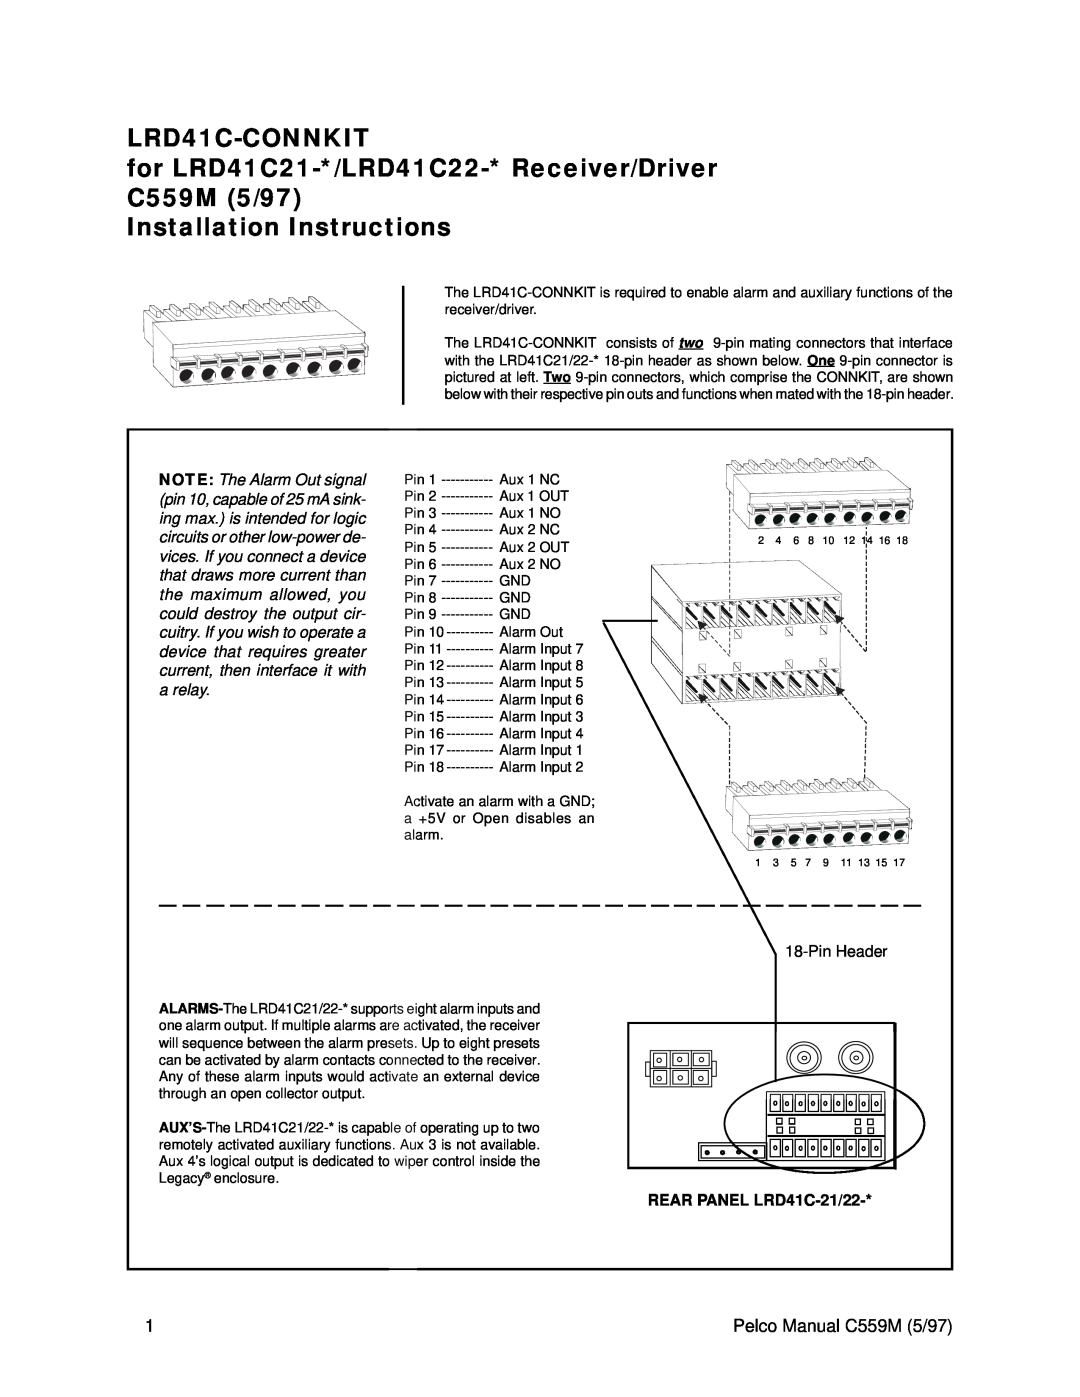 Pelco LRD41C22 installation instructions Pelco Manual C559M 5/97, LRD41C-CONNKIT, Installation Instructions, PinHeader 